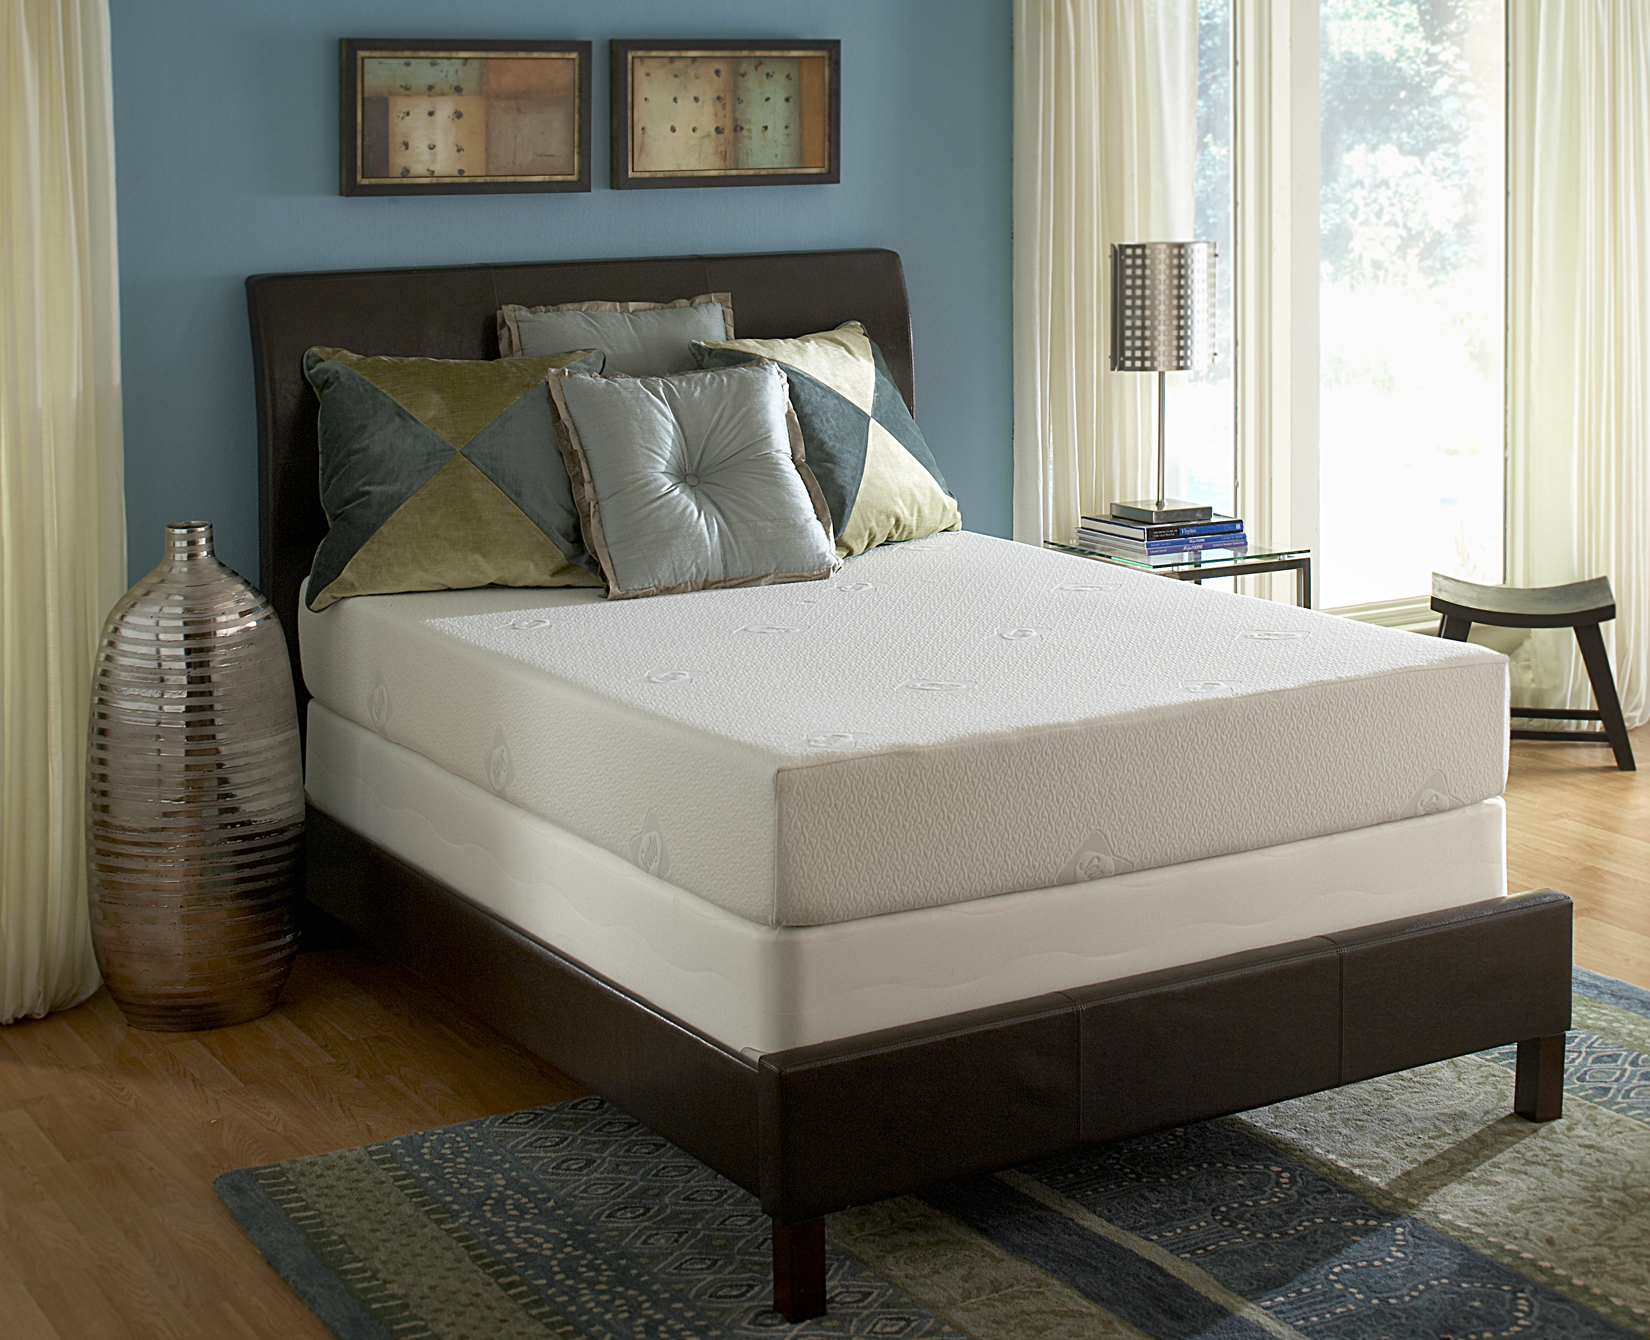 sealy comfort series mattress